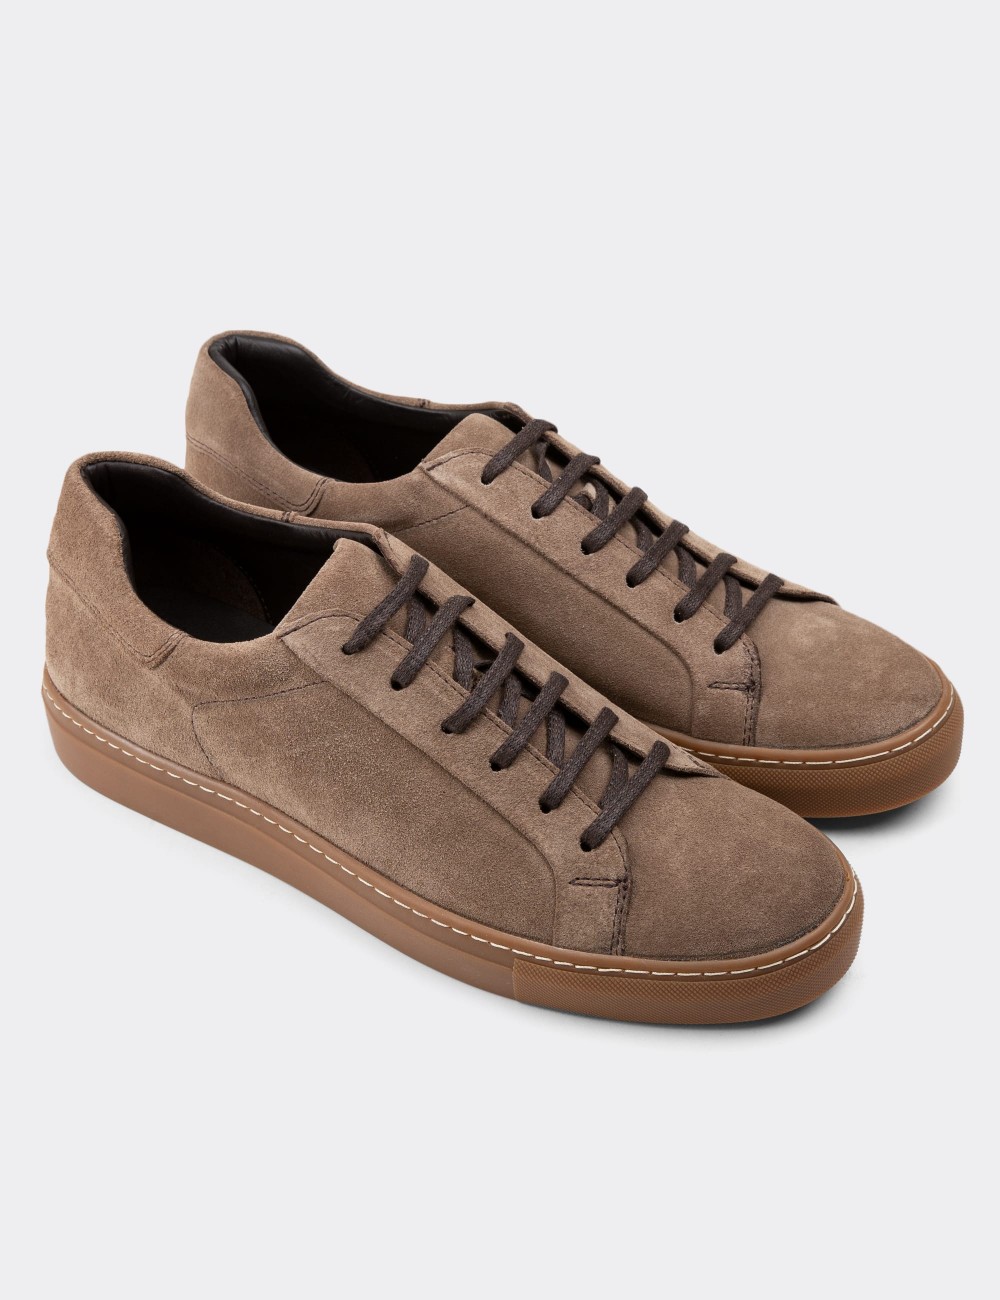 Sandstone Suede Leather Sneakers - 01829MVZNC02